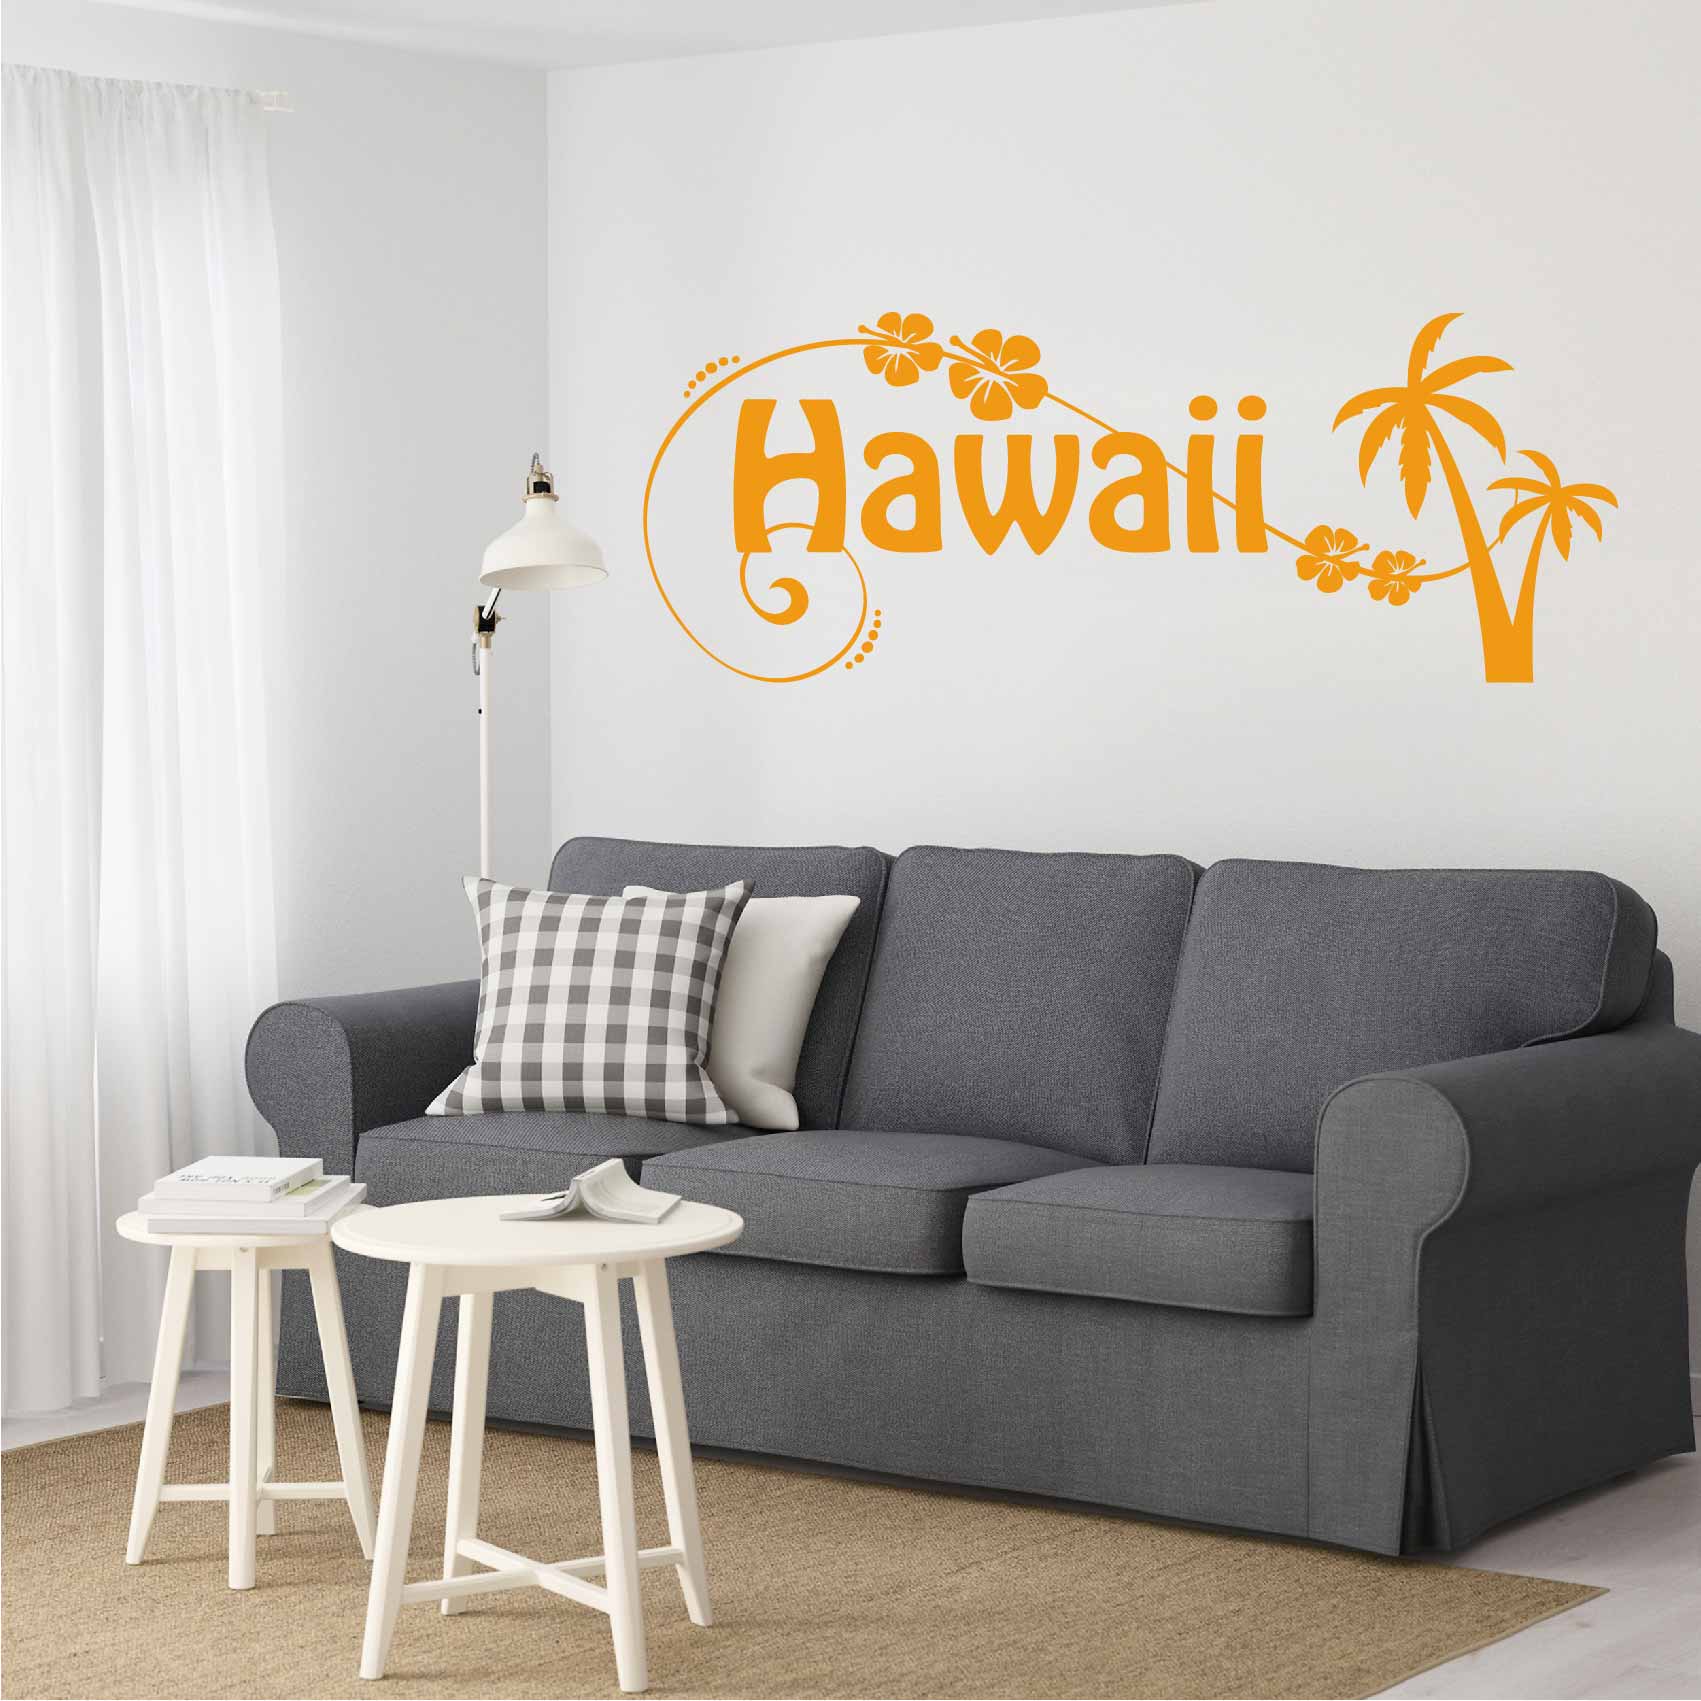 stickers-hawaii-palmier-ref8USA-stickers-muraux-usa-autocollant-etat-unis-deco-sticker-mural-amerique-salon-chambre-voyage-travel